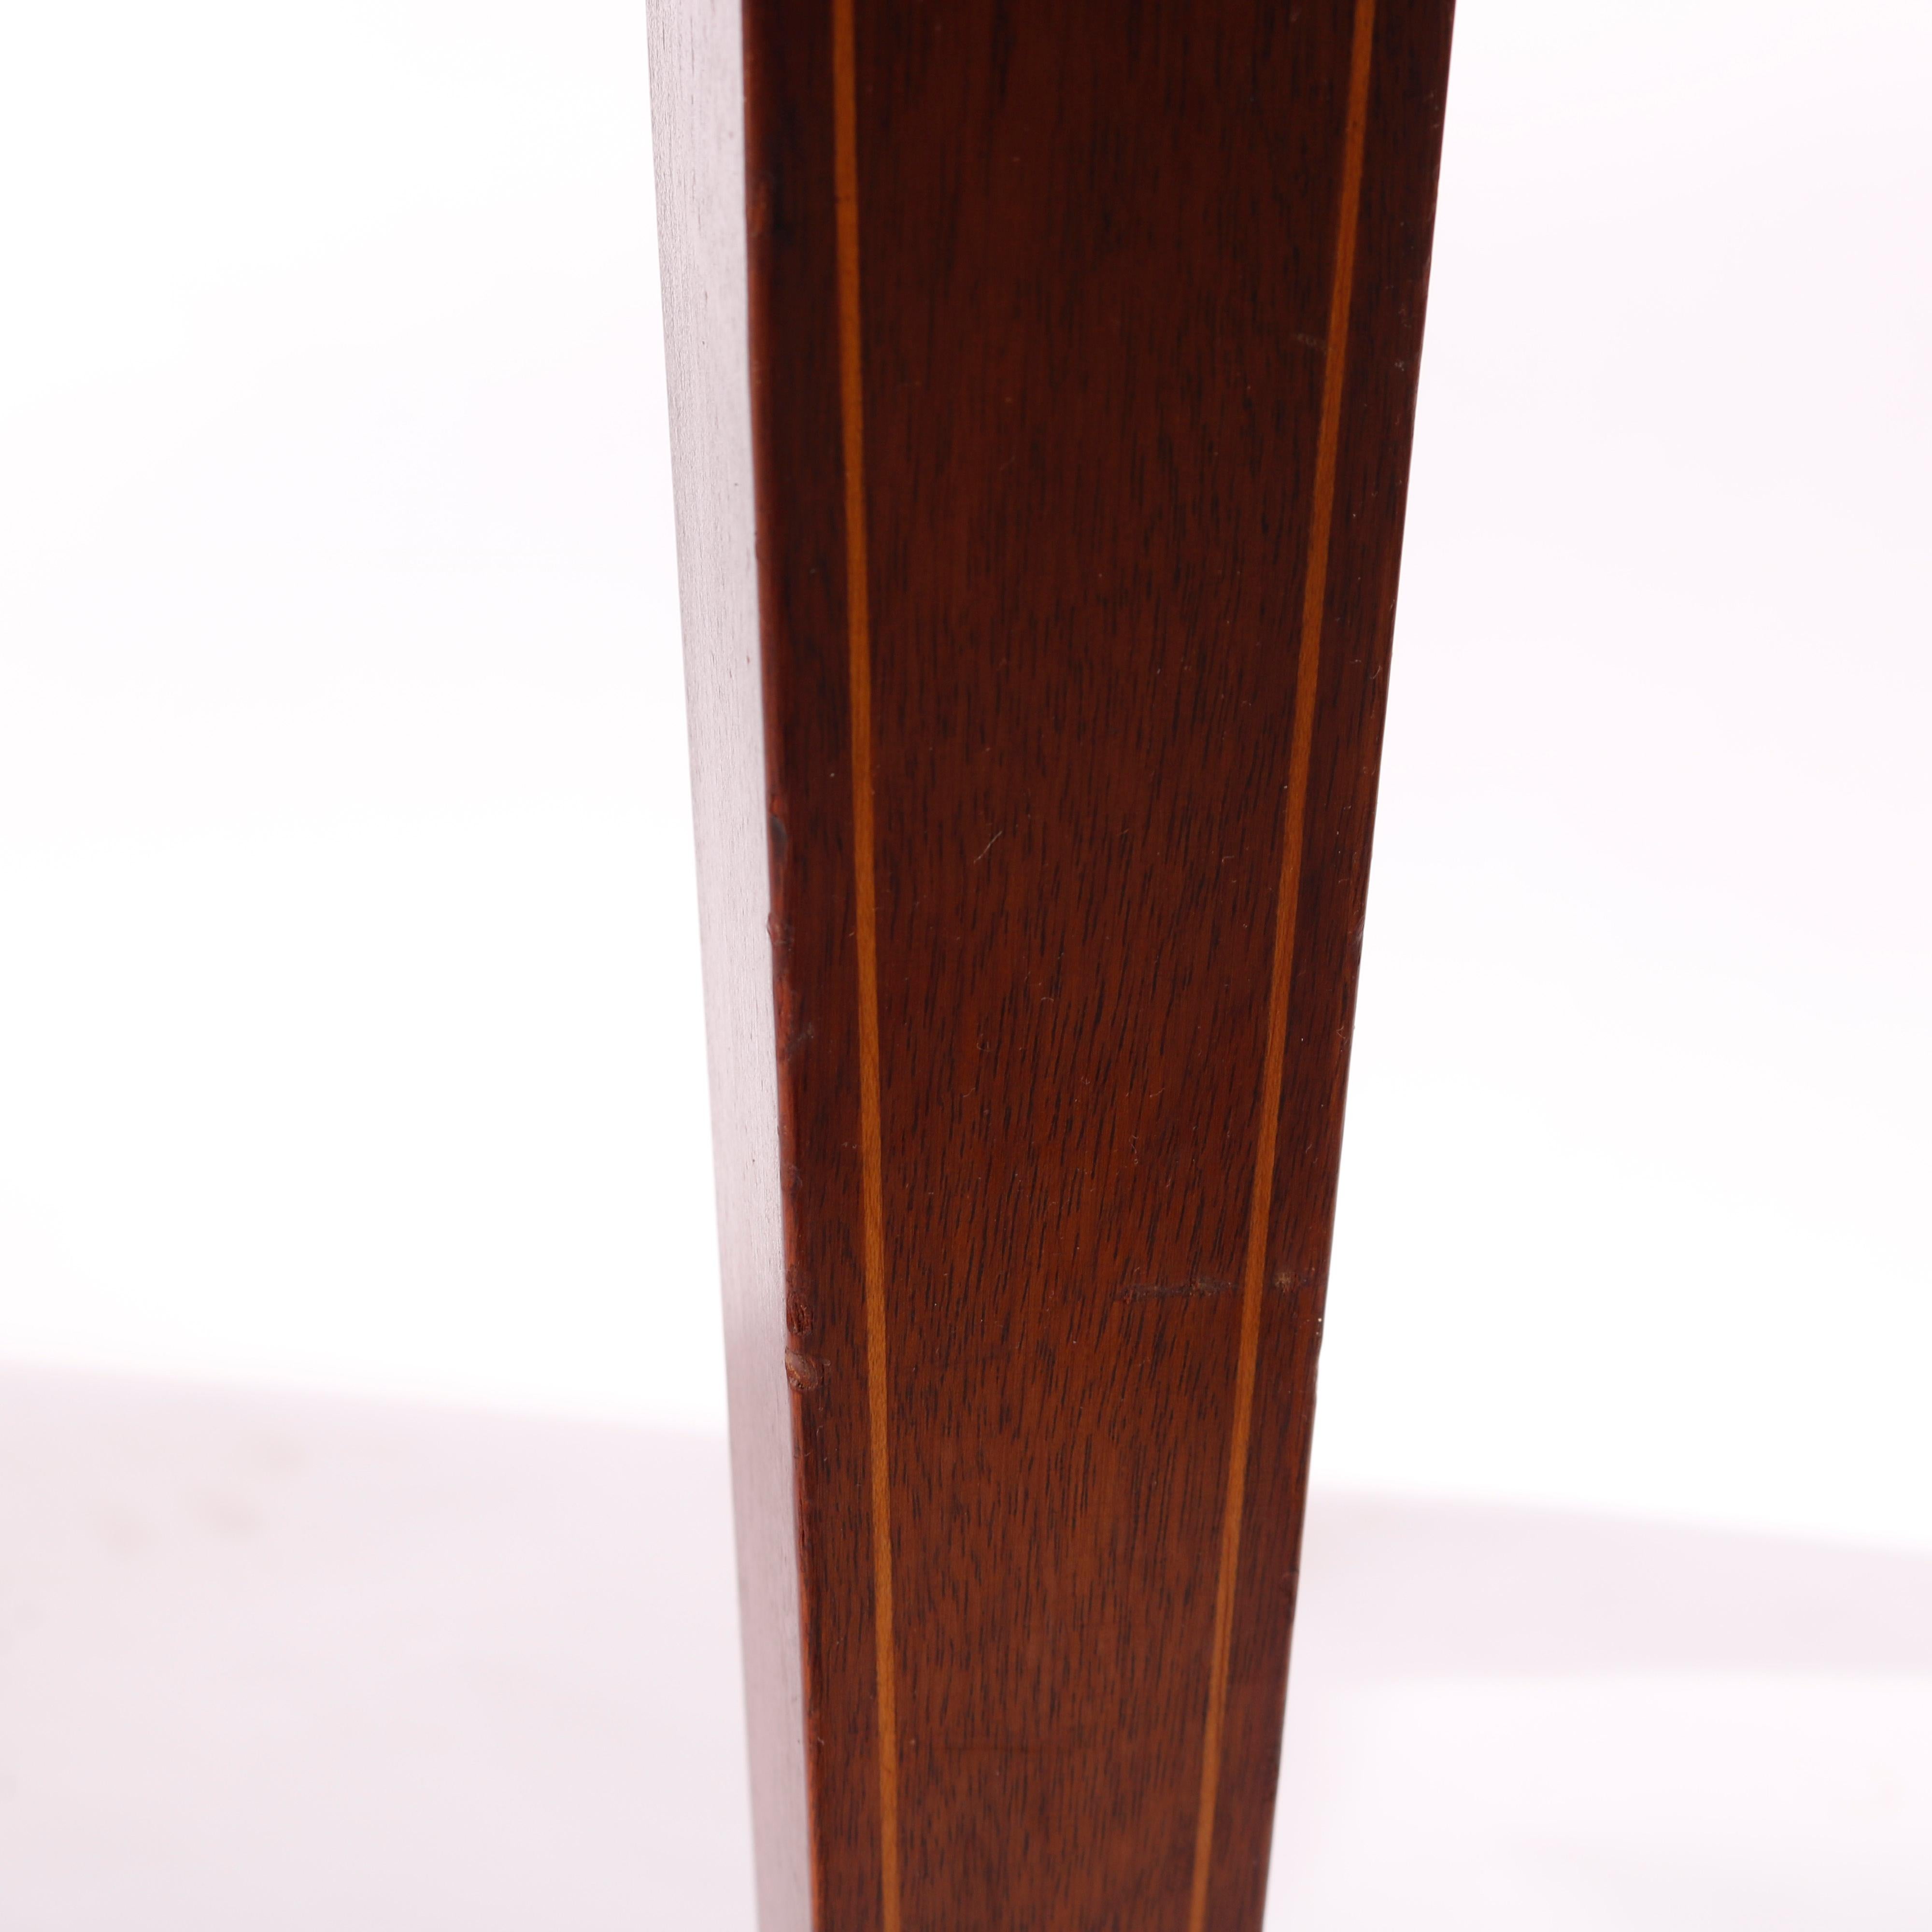 Antique Hepplewhite Style Kittinger Flame Mahogany Demilune Sideboard c1930 For Sale 10